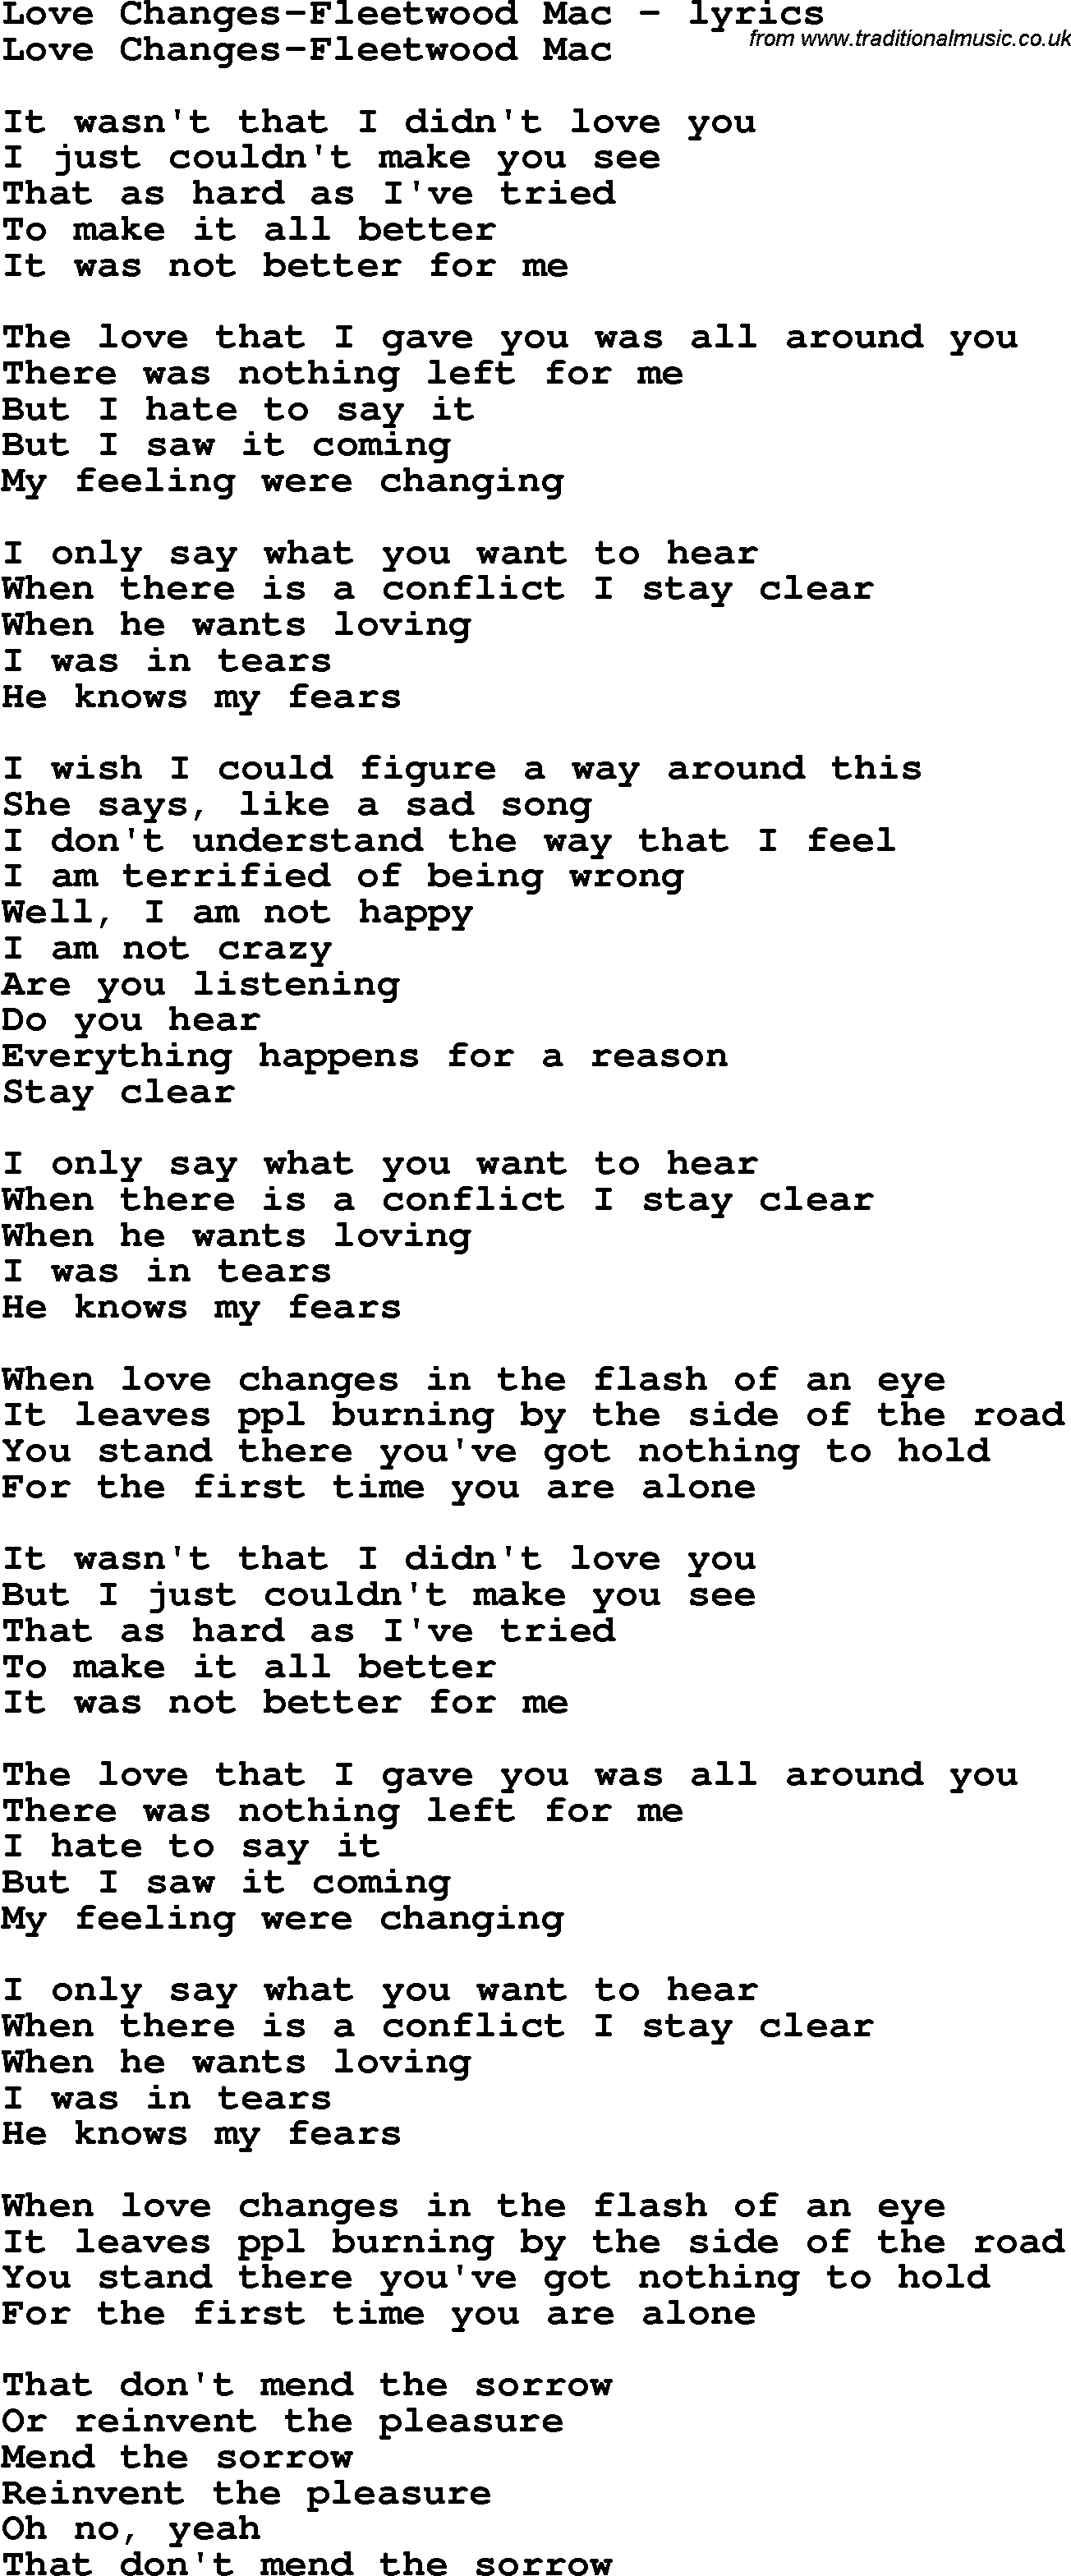 Love Song Lyrics for: Love Changes-Fleetwood Mac